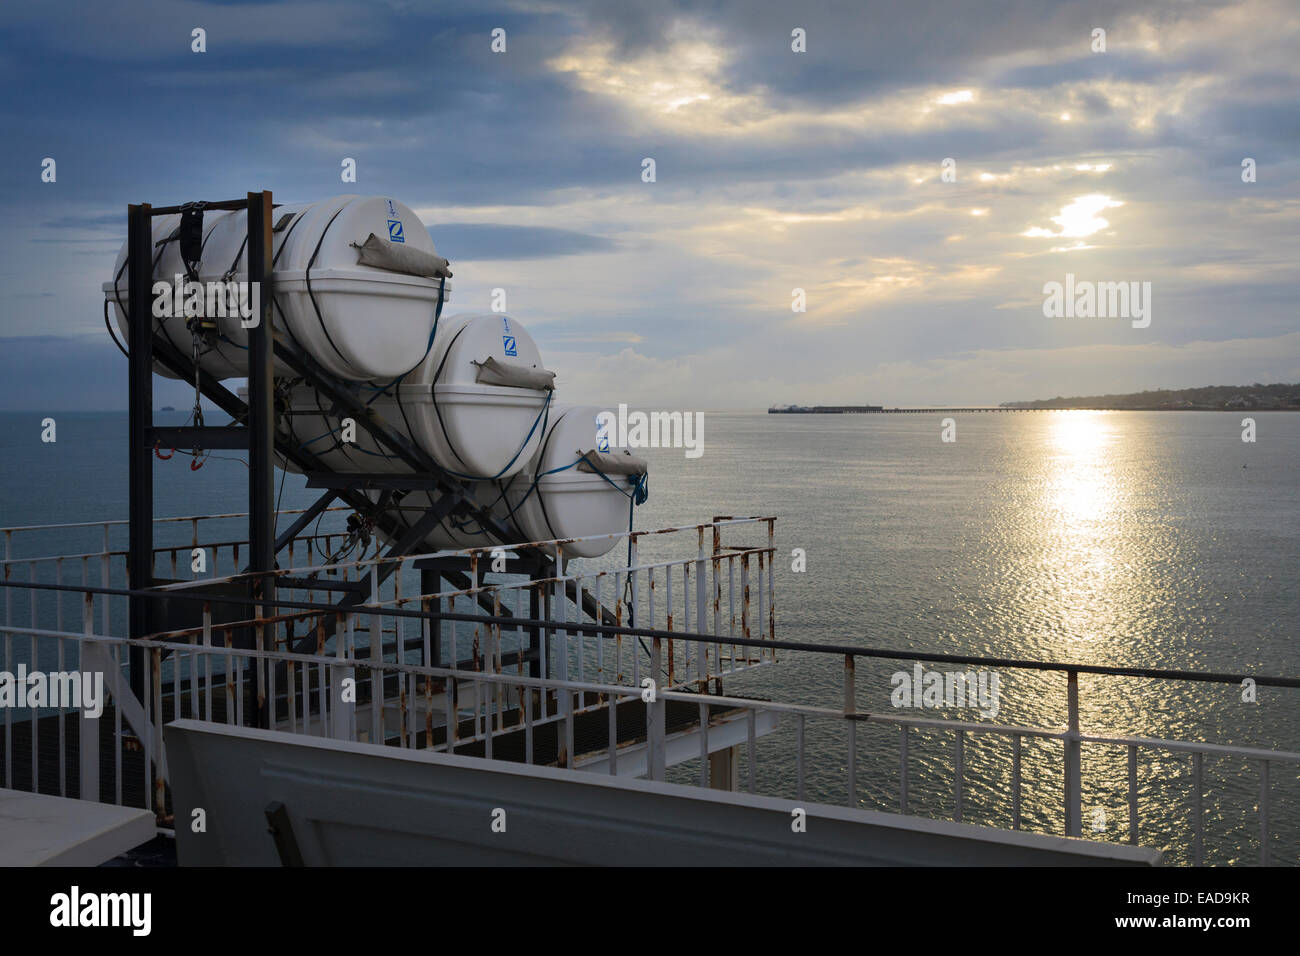 Zodiac Liferaft deployment slide on car ferry Stock Photo